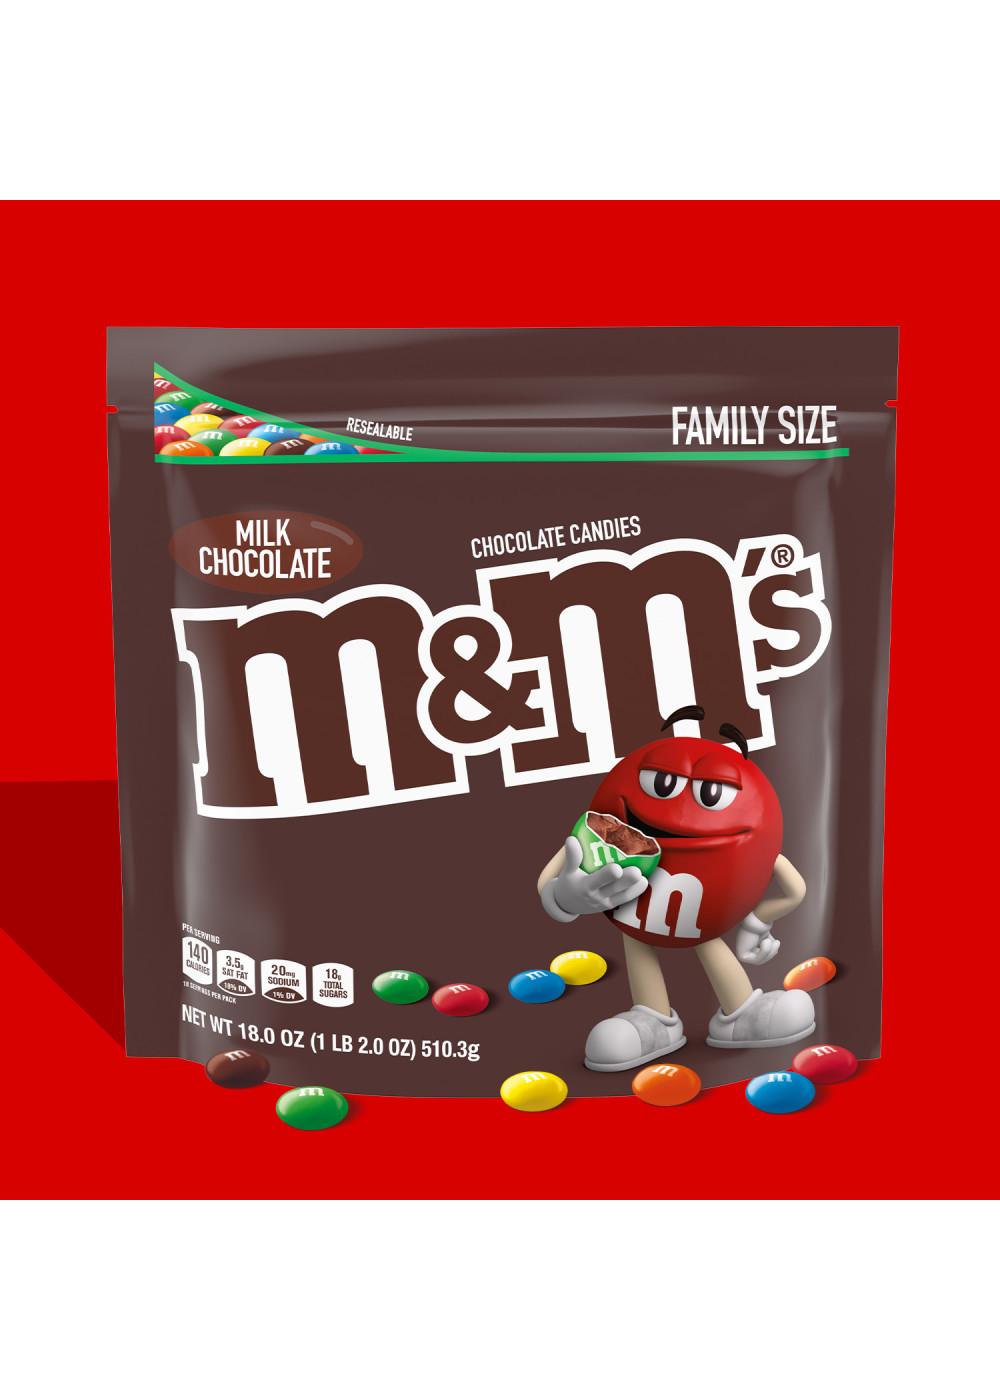 M&M's Milk Chocolate Candy - Family Size 18 oz